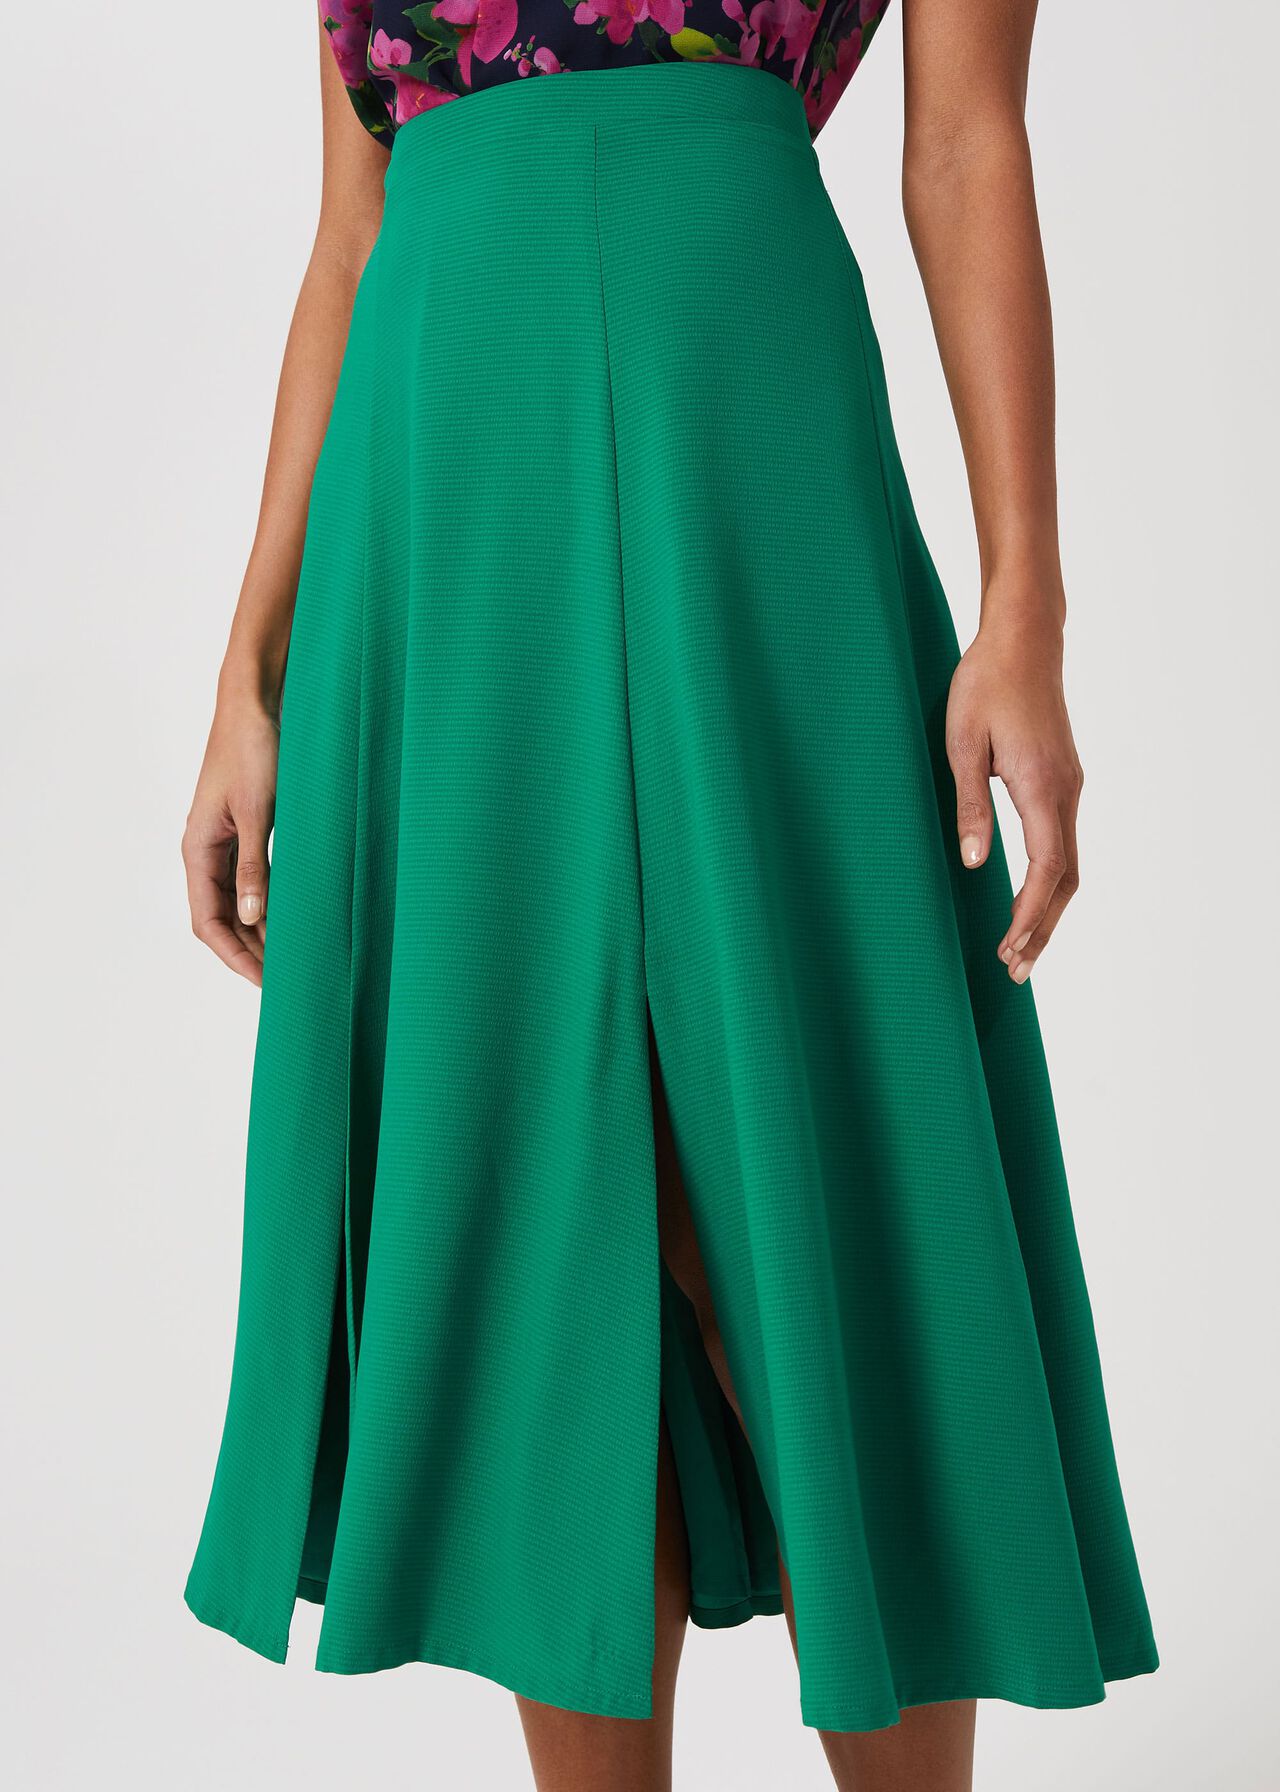 Marie Satin Midi Skirt, Field Green, hi-res